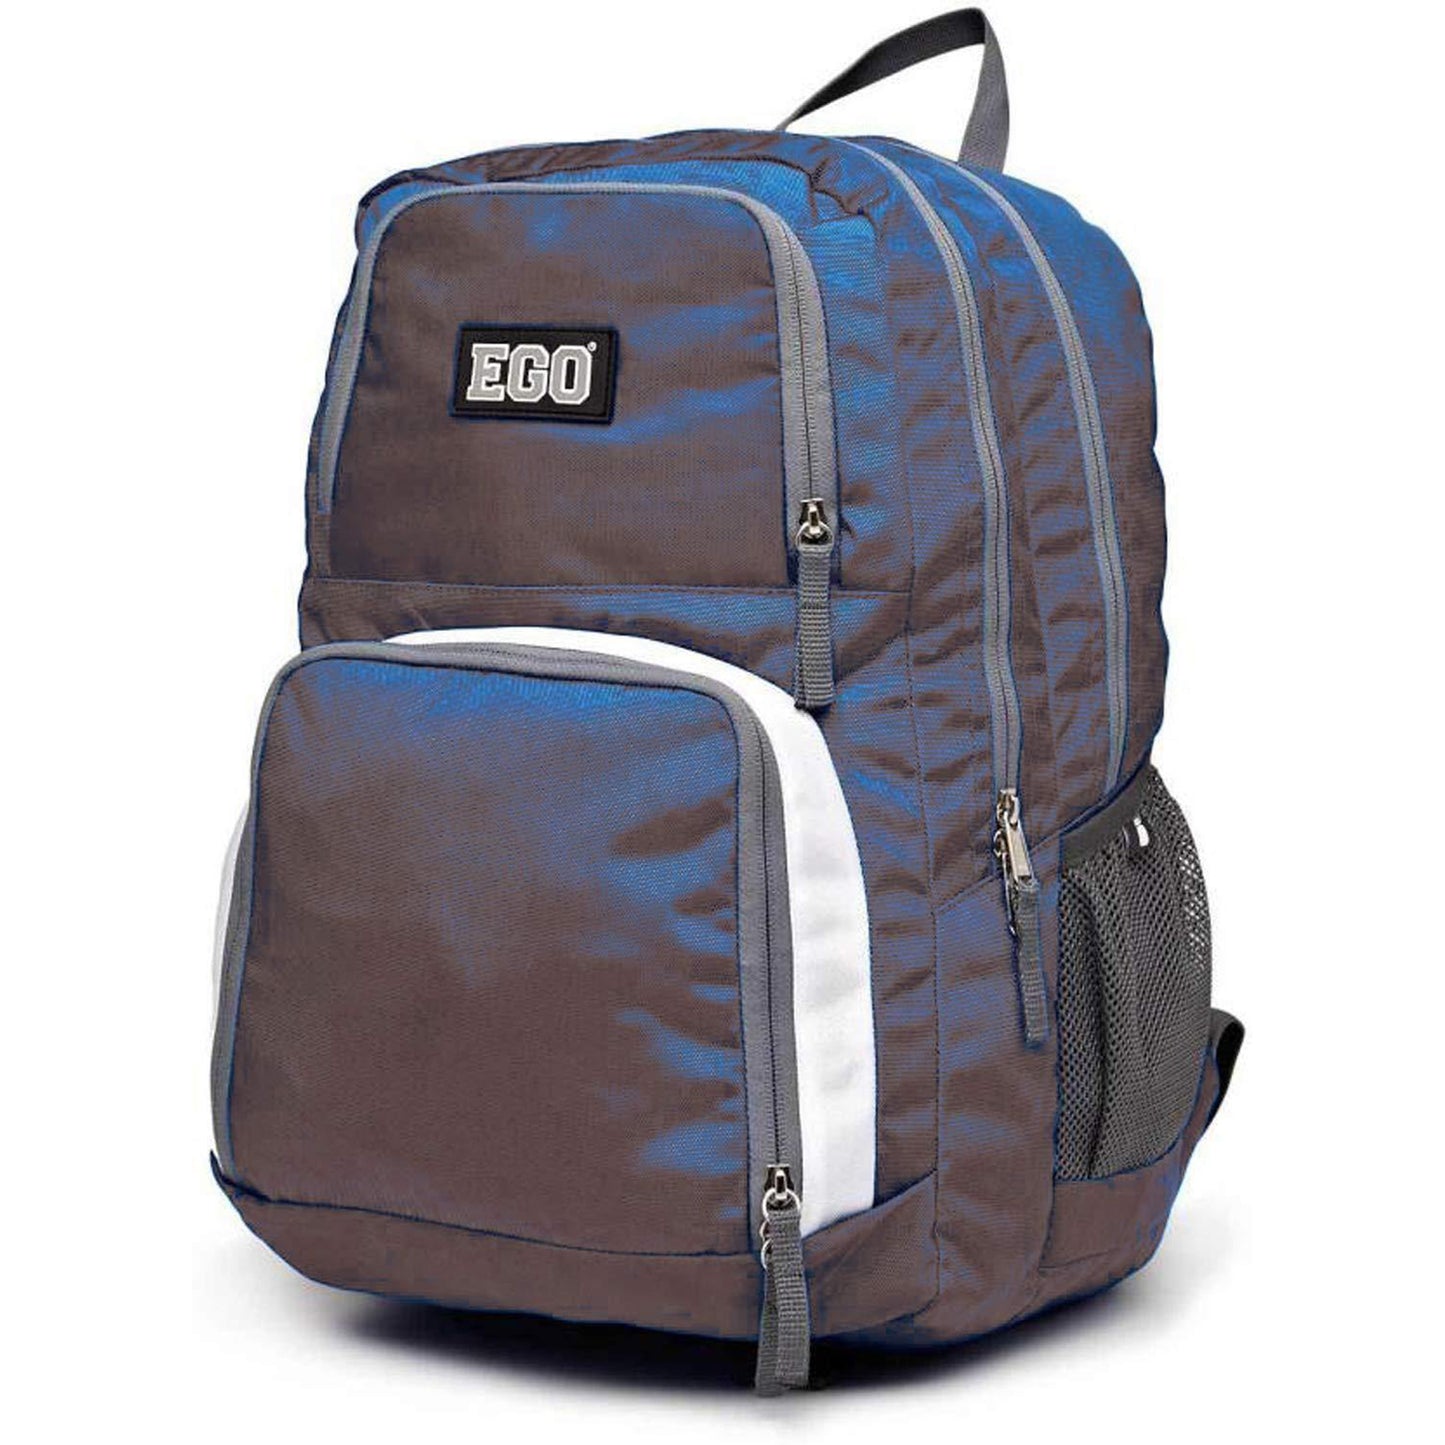 Prokick Ego 33 Ltrs Large Lite Weight Waterproof Casual Backpack |Travel Bag | School Bag, Grey - Best Price online Prokicksports.com